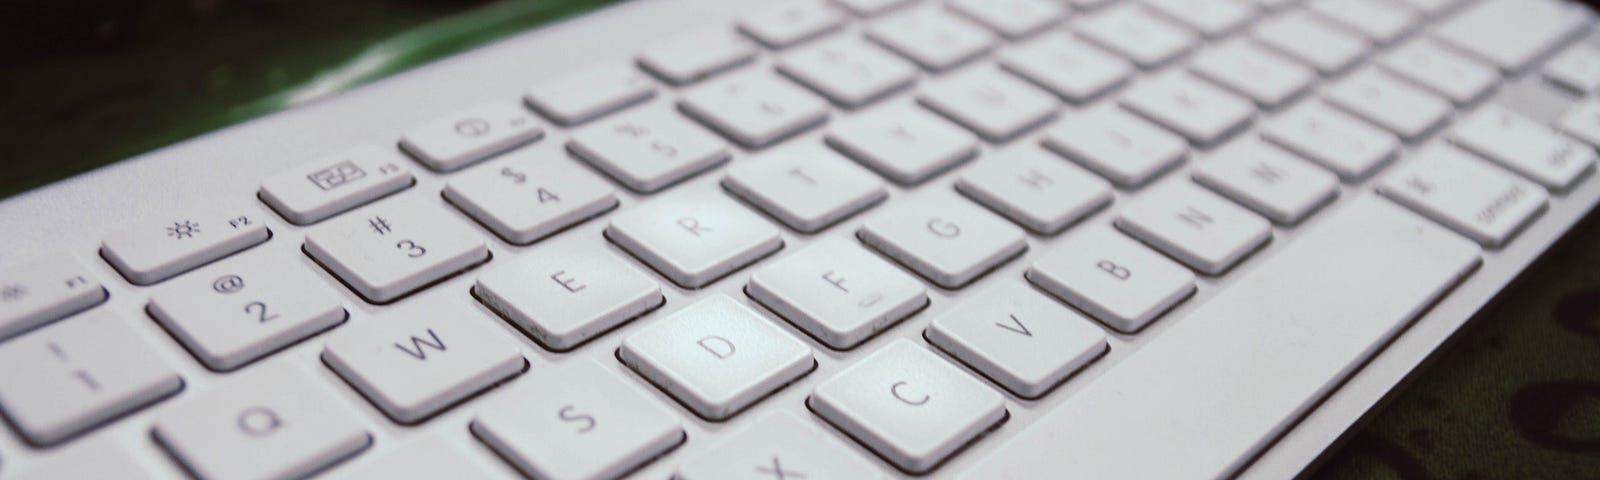 A white keyboard laid on a desk